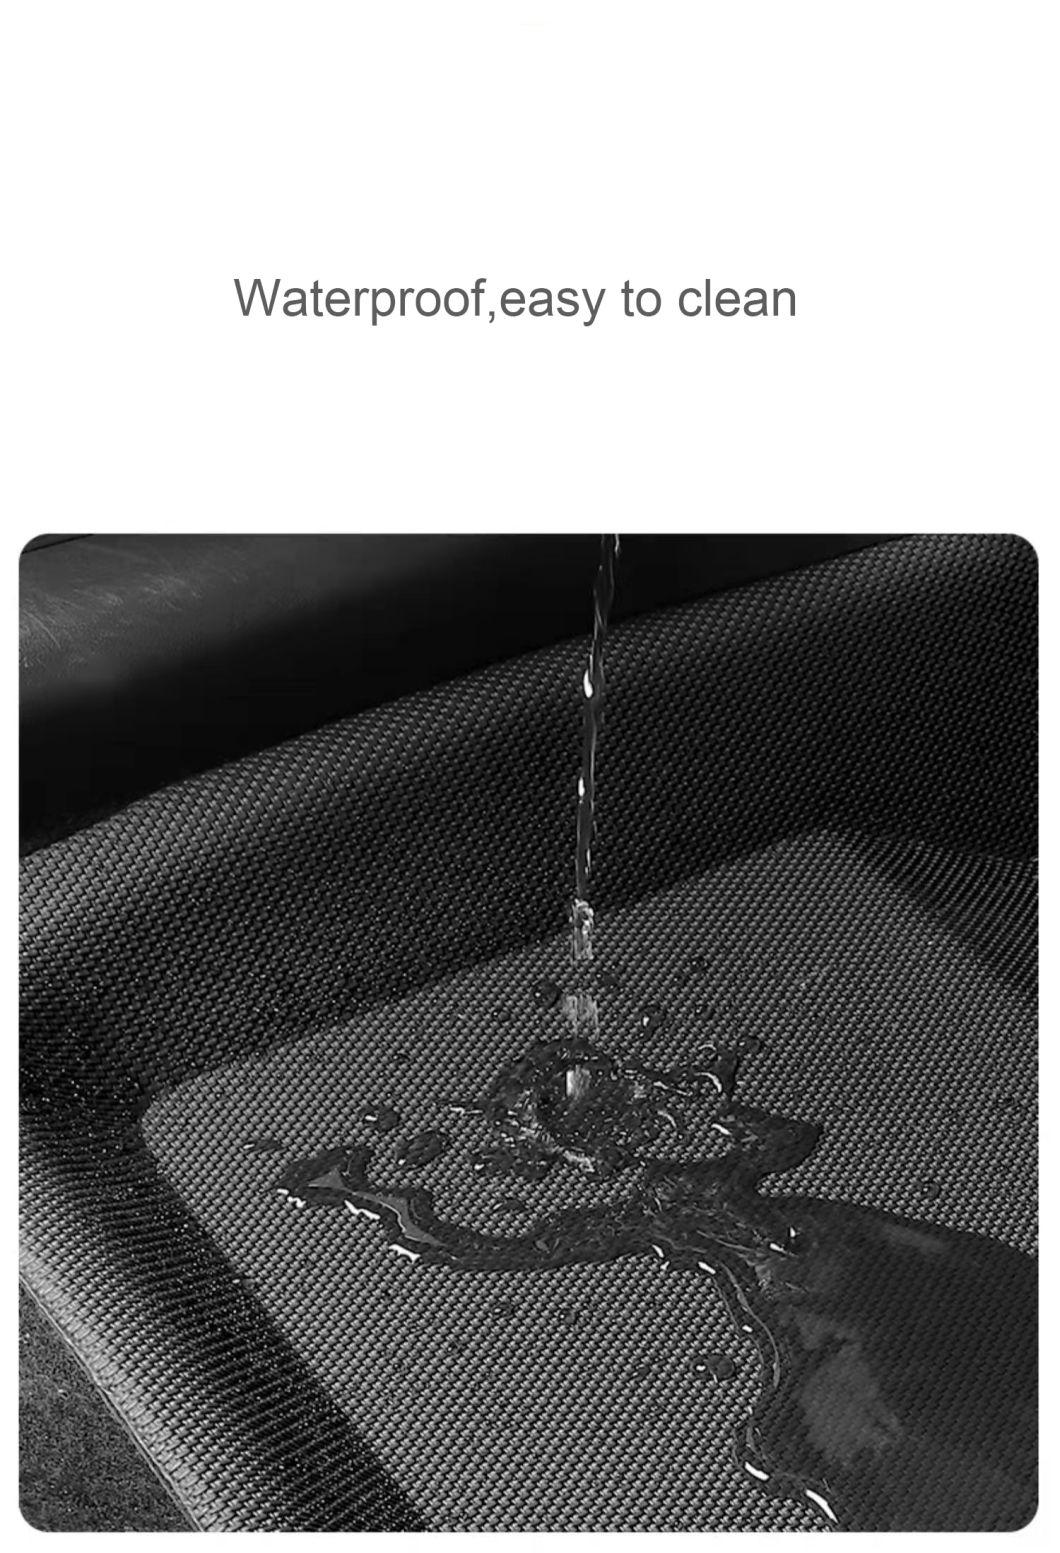 Factory Big Promotion Durable Protector Waterproof 5D TPE Leather Car Foot Carpet Floor Mat Car Mats